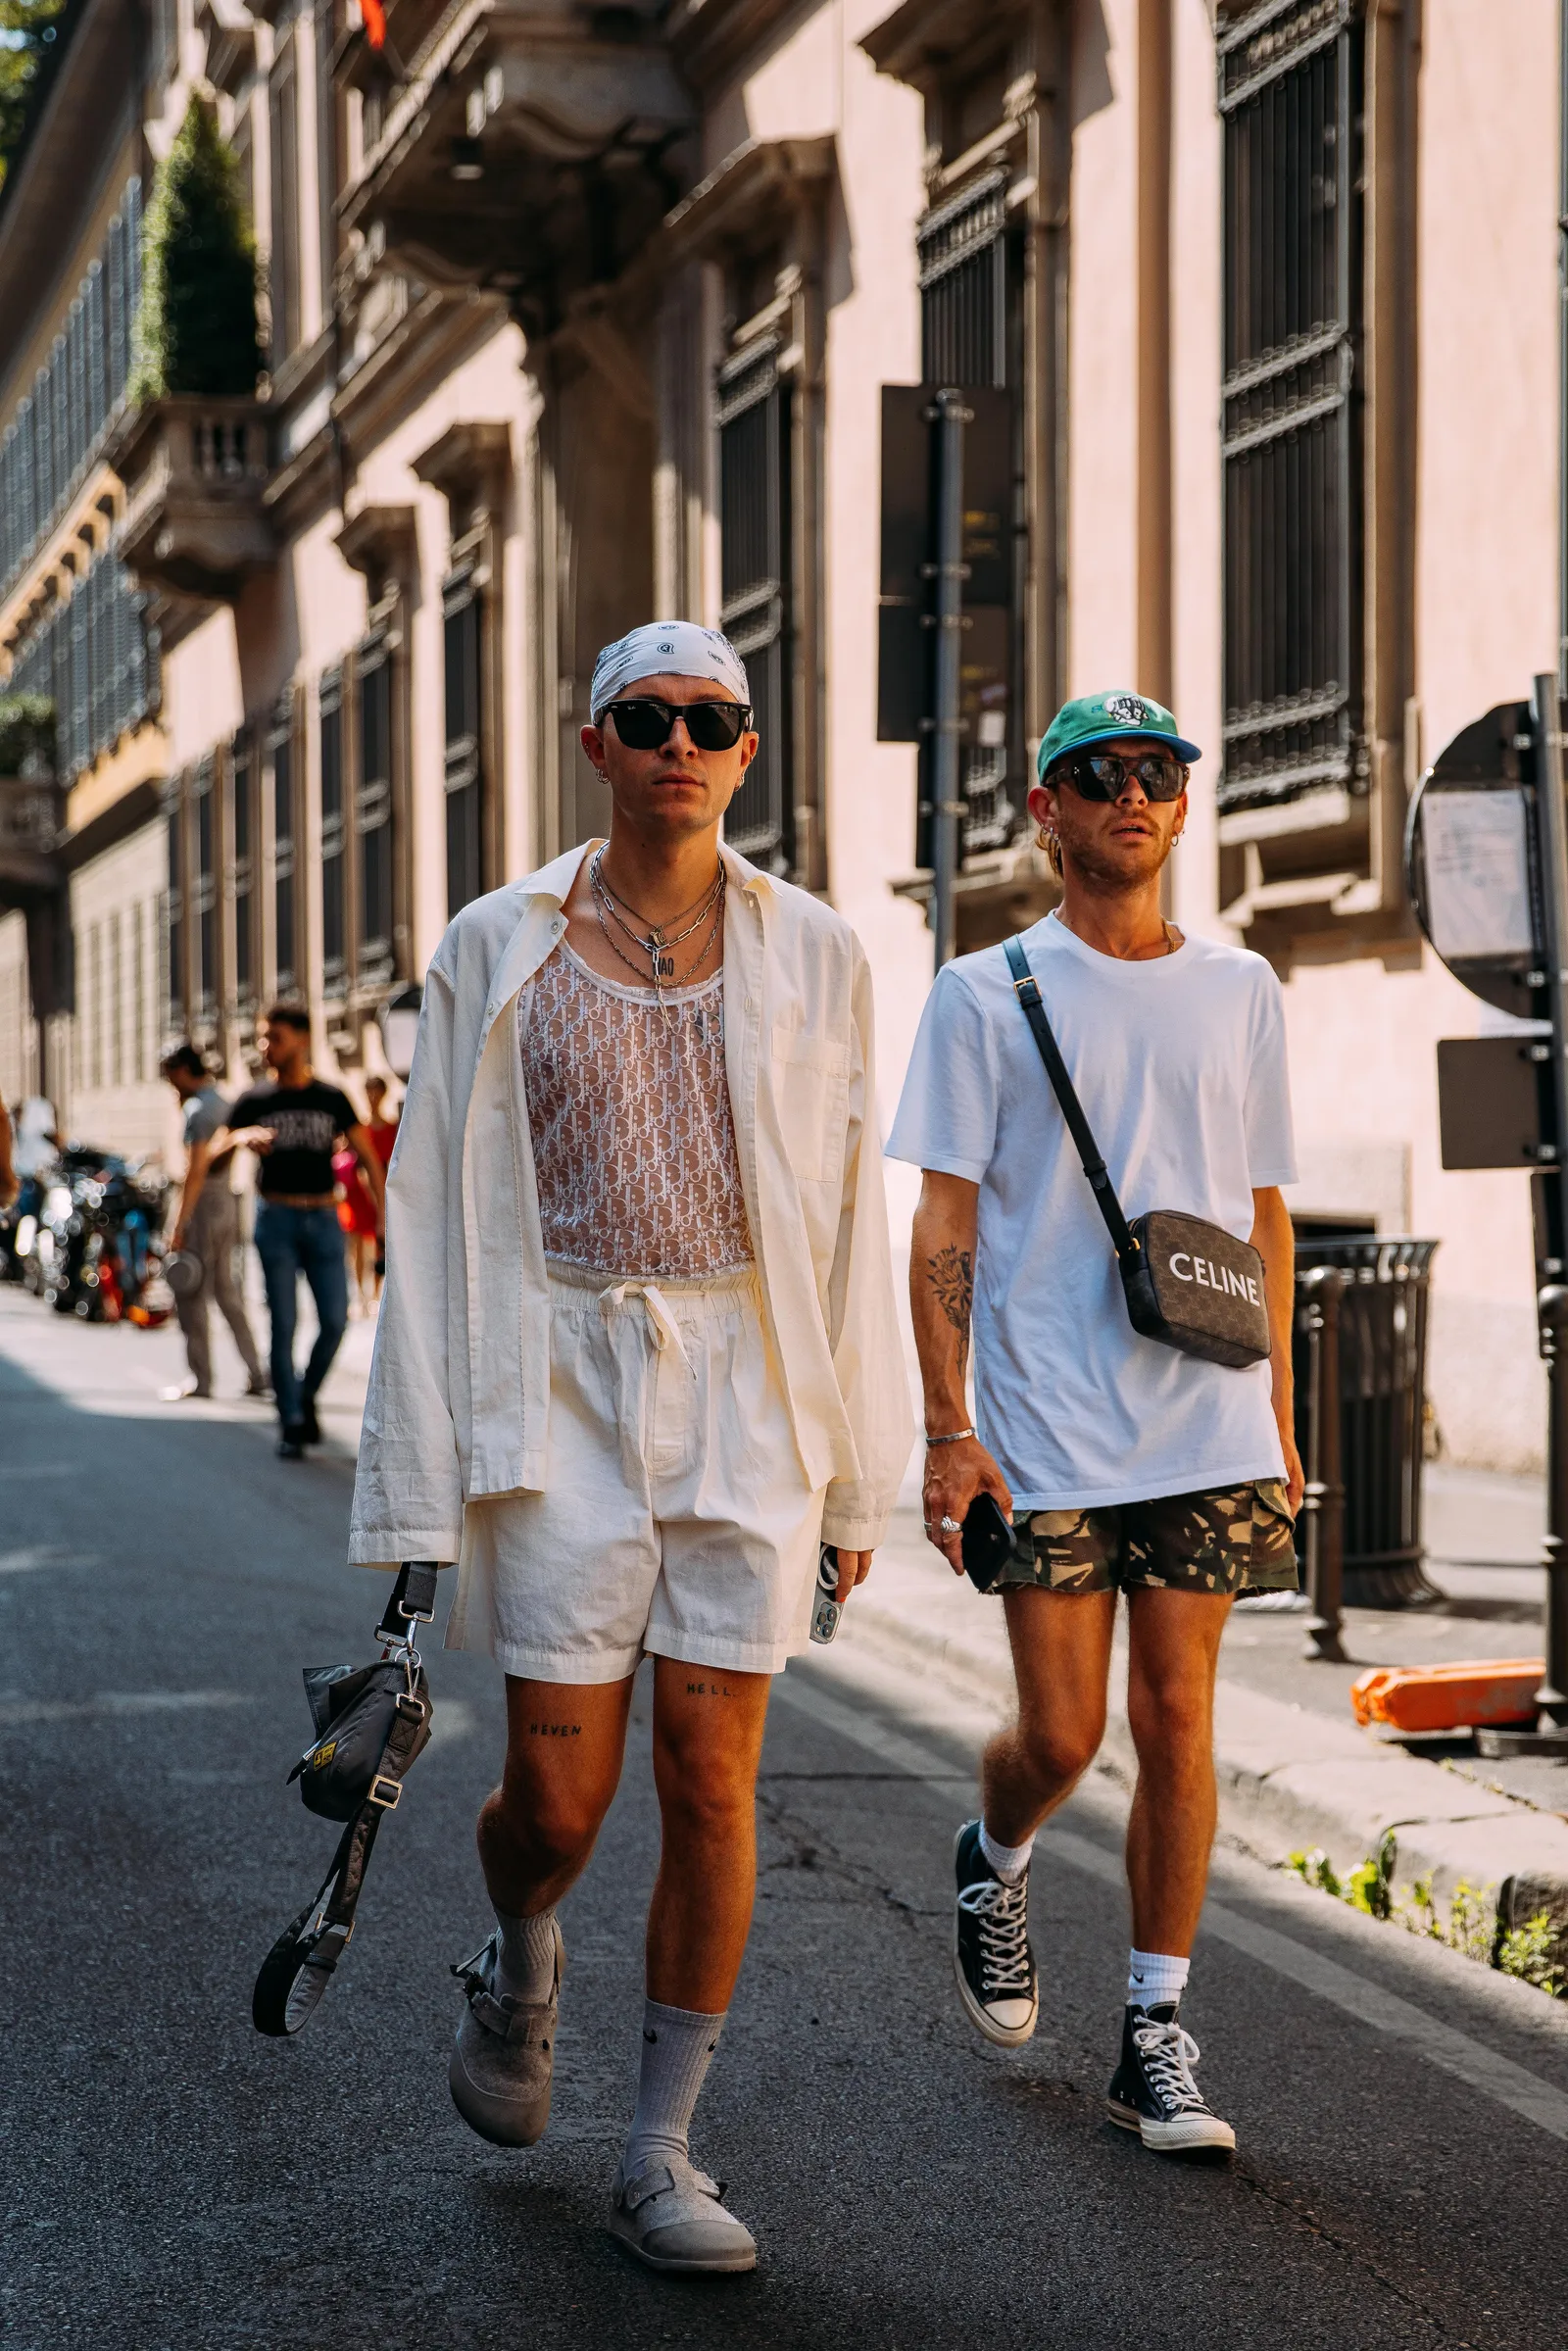 Milan Street Style - The Best Street Style From Milan Fashion Week